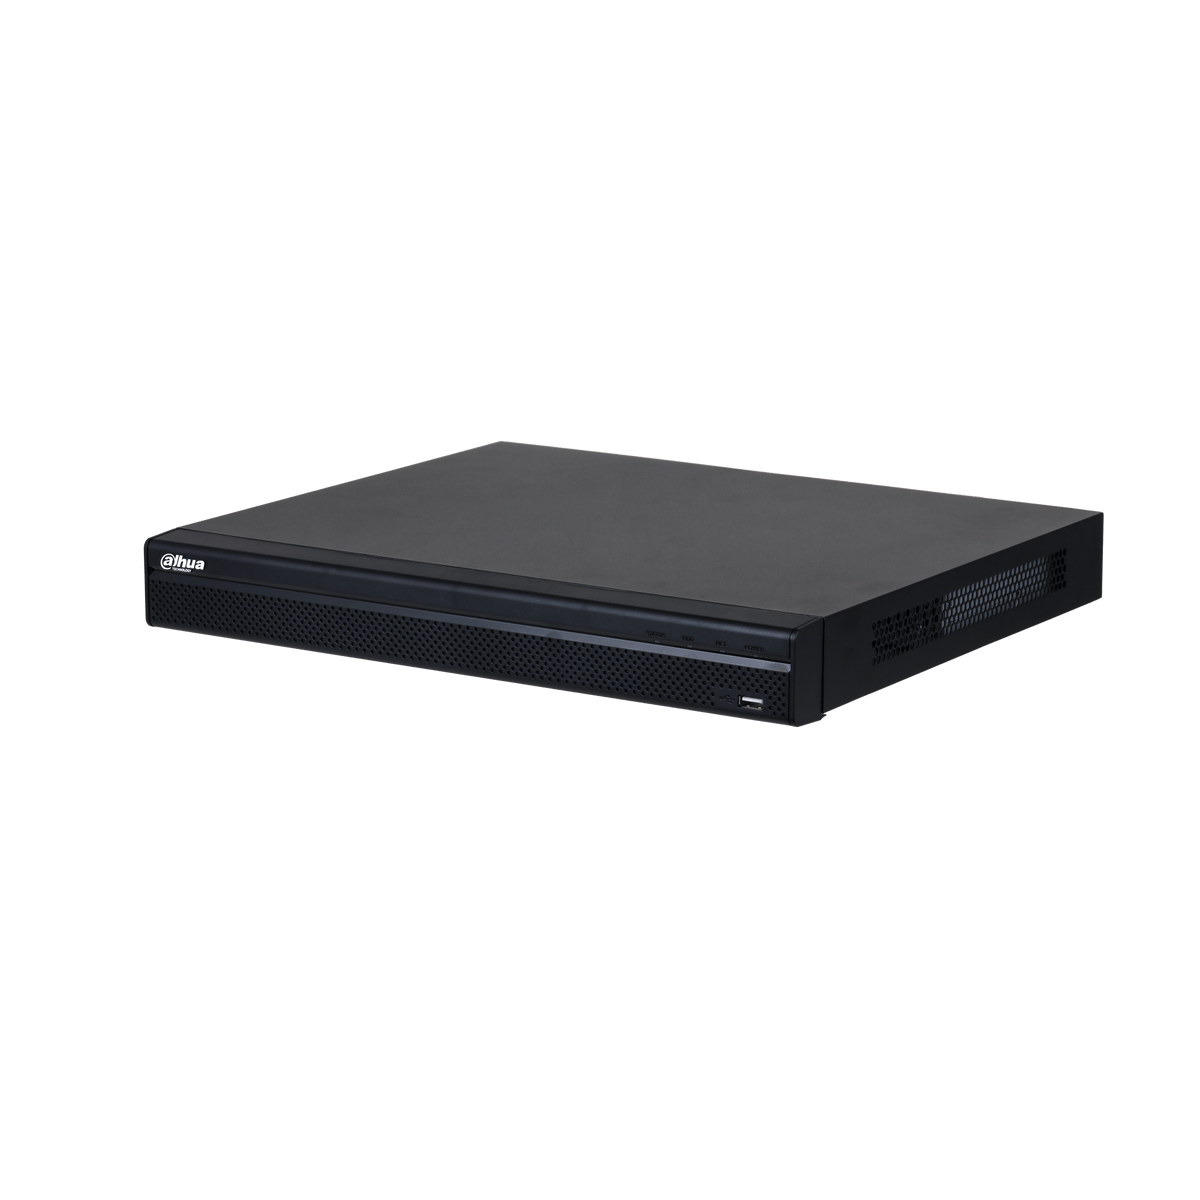 DAHUA NVR4216-16P-4KS2/L 16 Channel 1U 2HDDs 16PoE Network Video Recorder